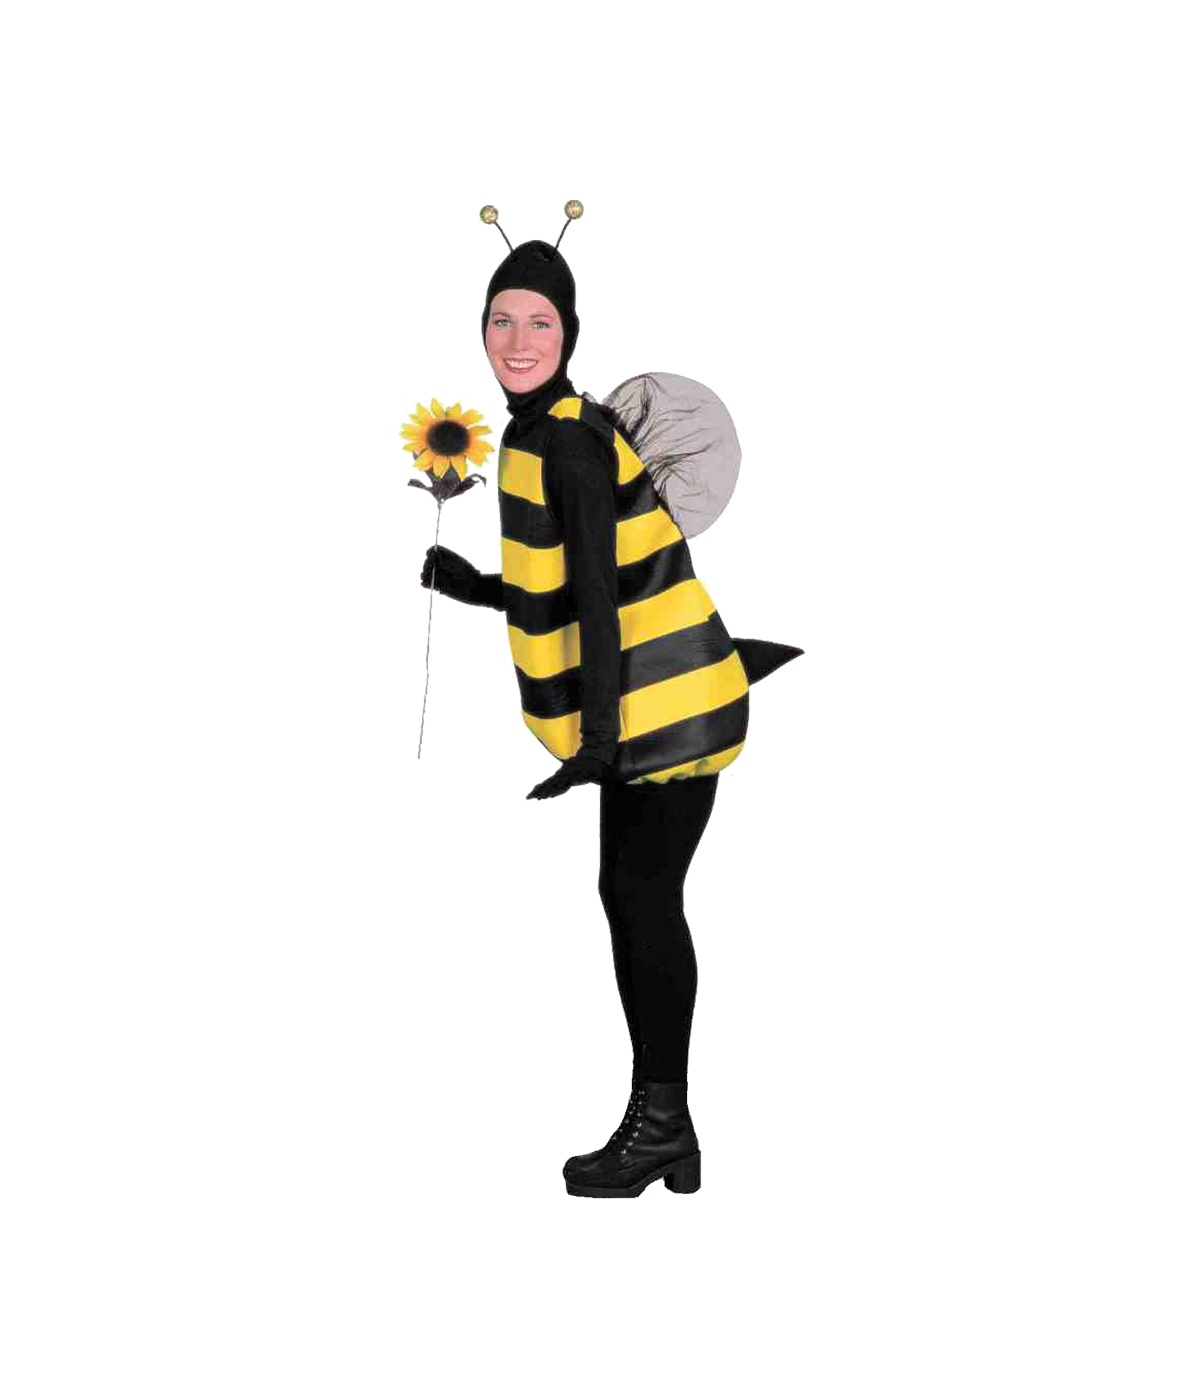  Buzzing Bumble Bee Costume